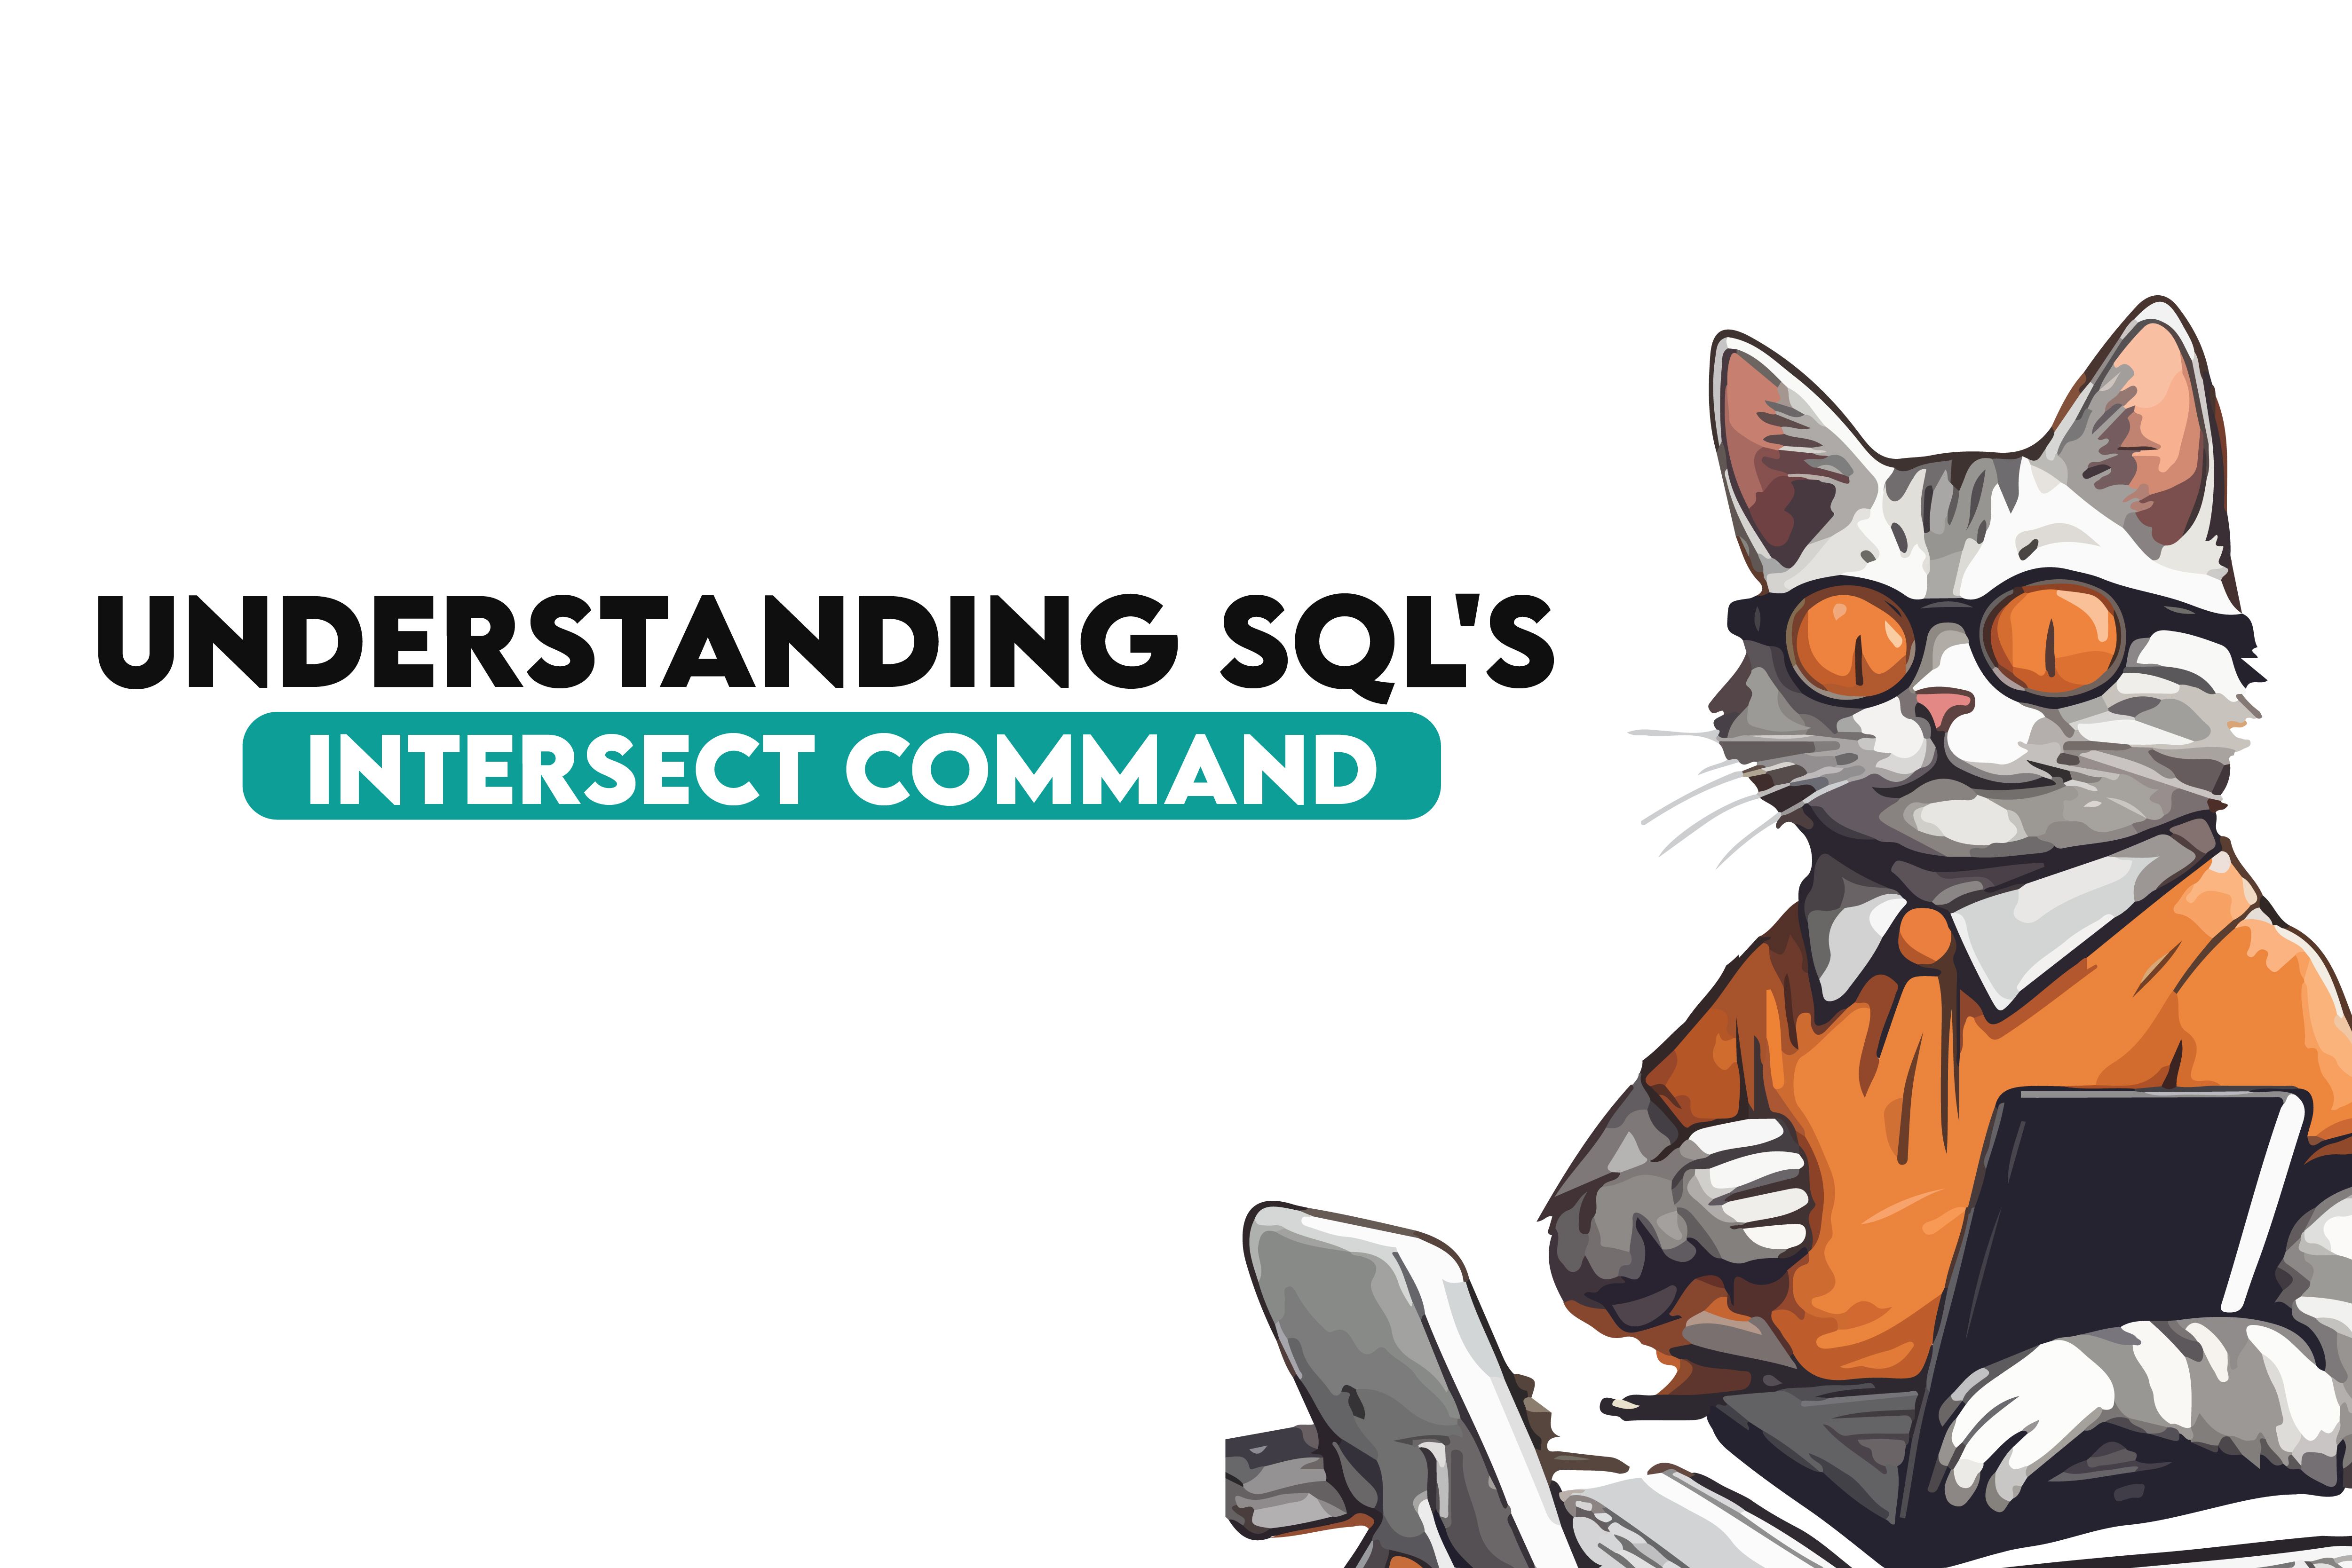 Understanding SQL INTERSECT Command